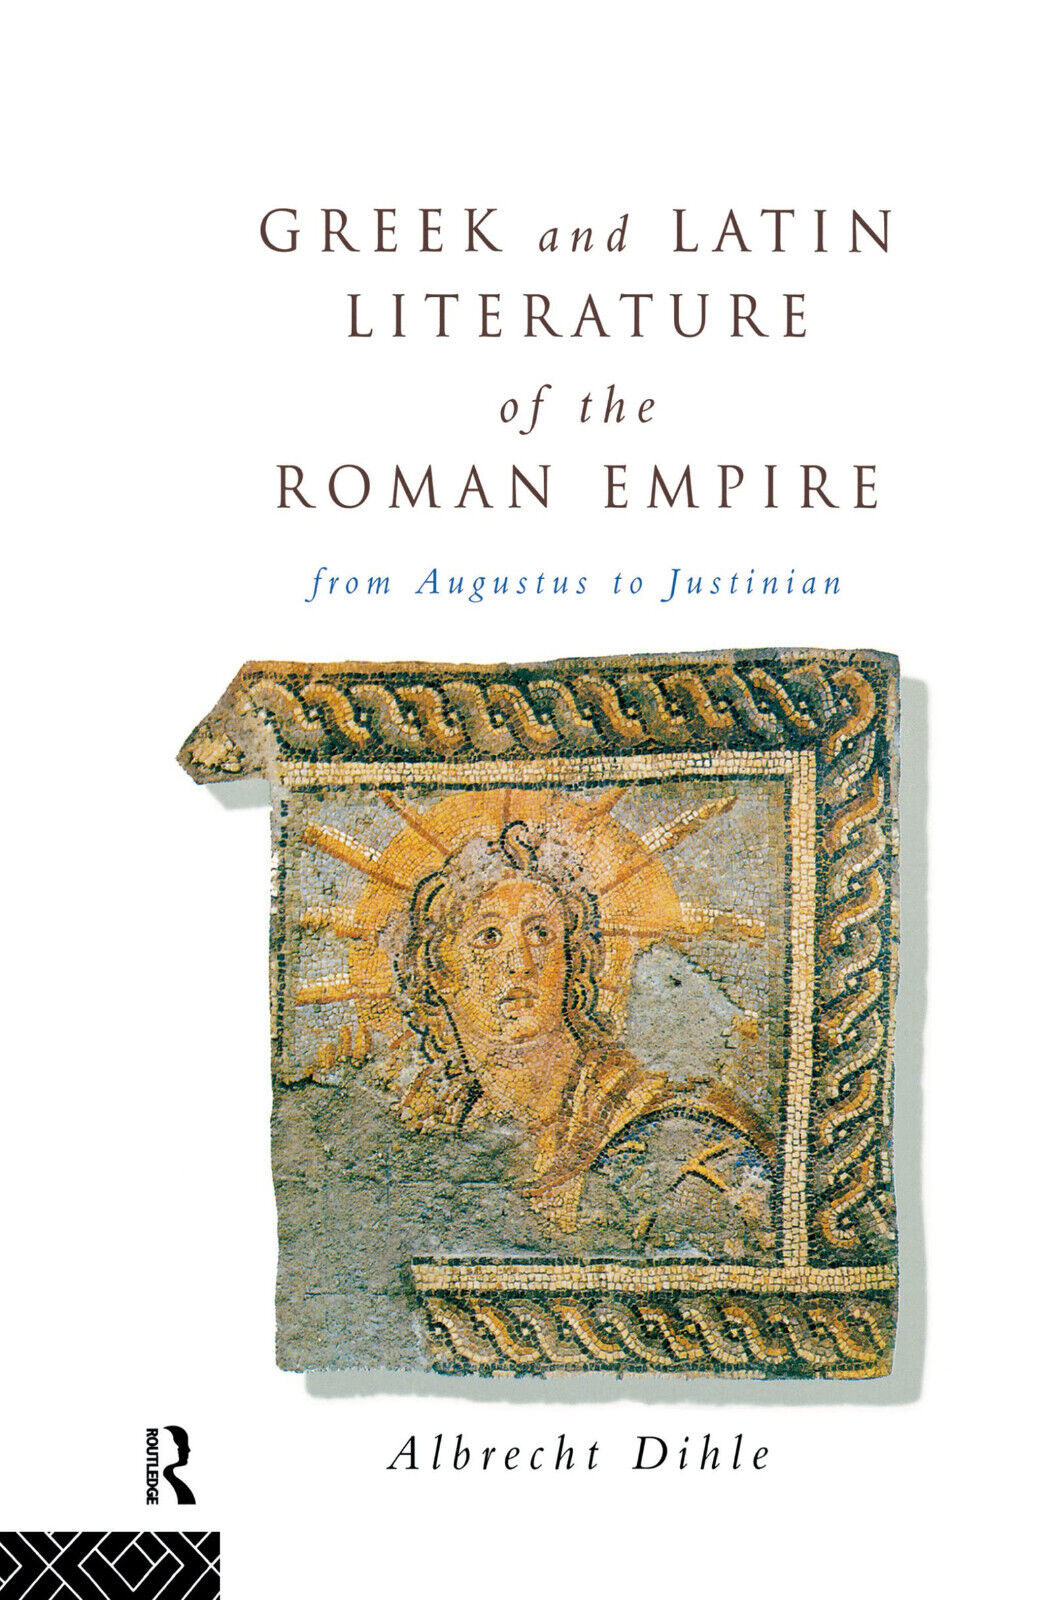 Greek and Latin Literature of the Roman Empire - Albrecht Dihle - Routledge,2013 libro usato